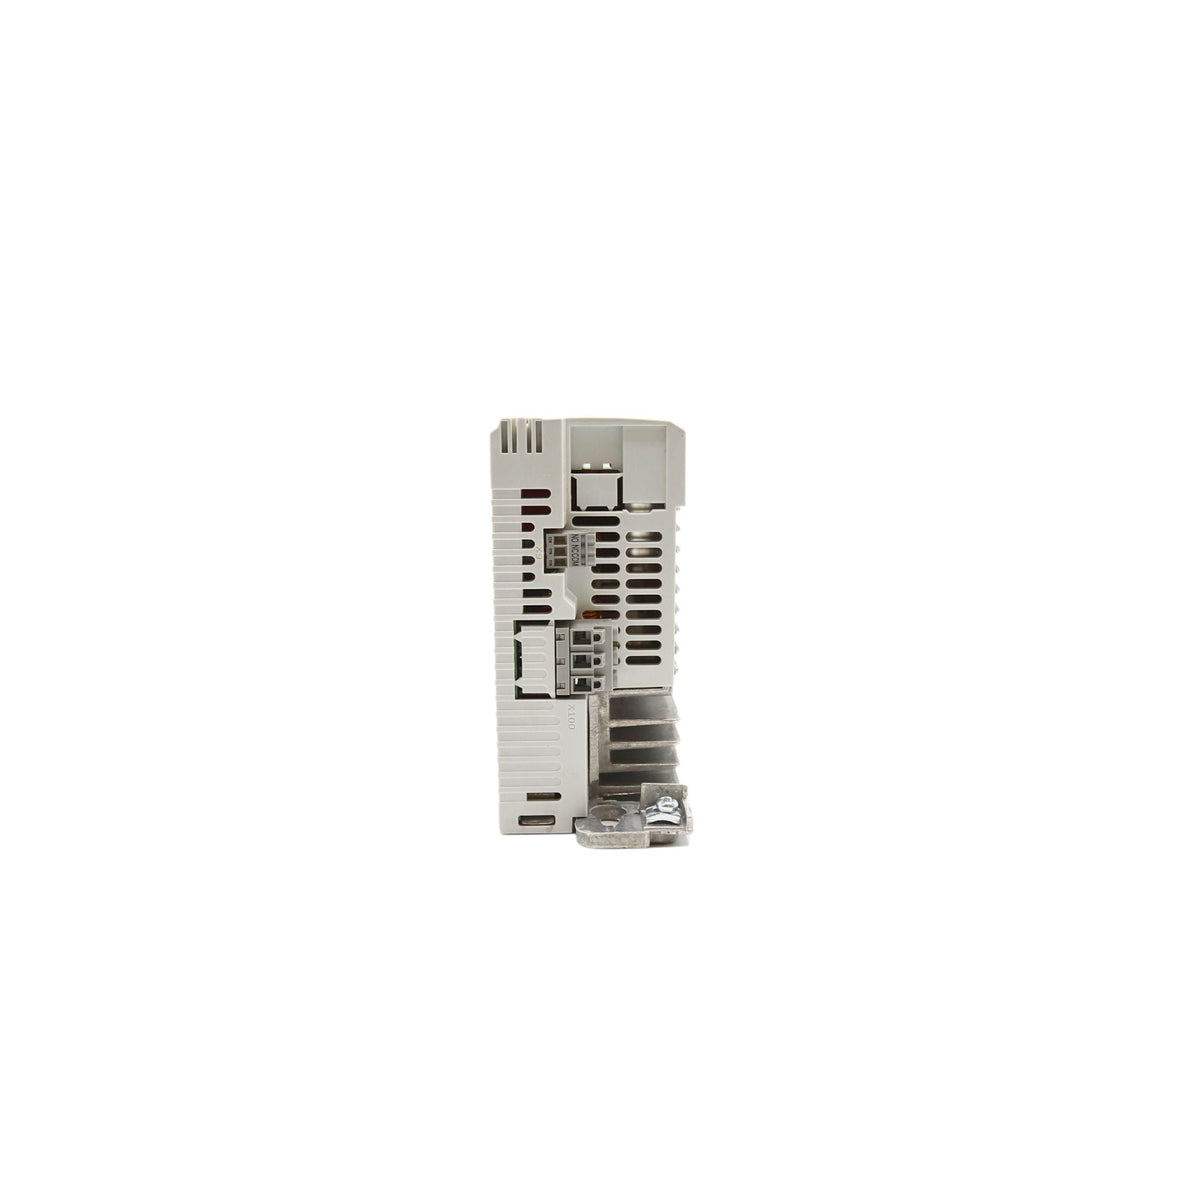 Lenze | i510 2hp Cabinet mount 480volt 5digital inputs, 2 analog inputs, 1 digital output 1 analog Output, 1 relay | I51AE215F10V11000S - side view